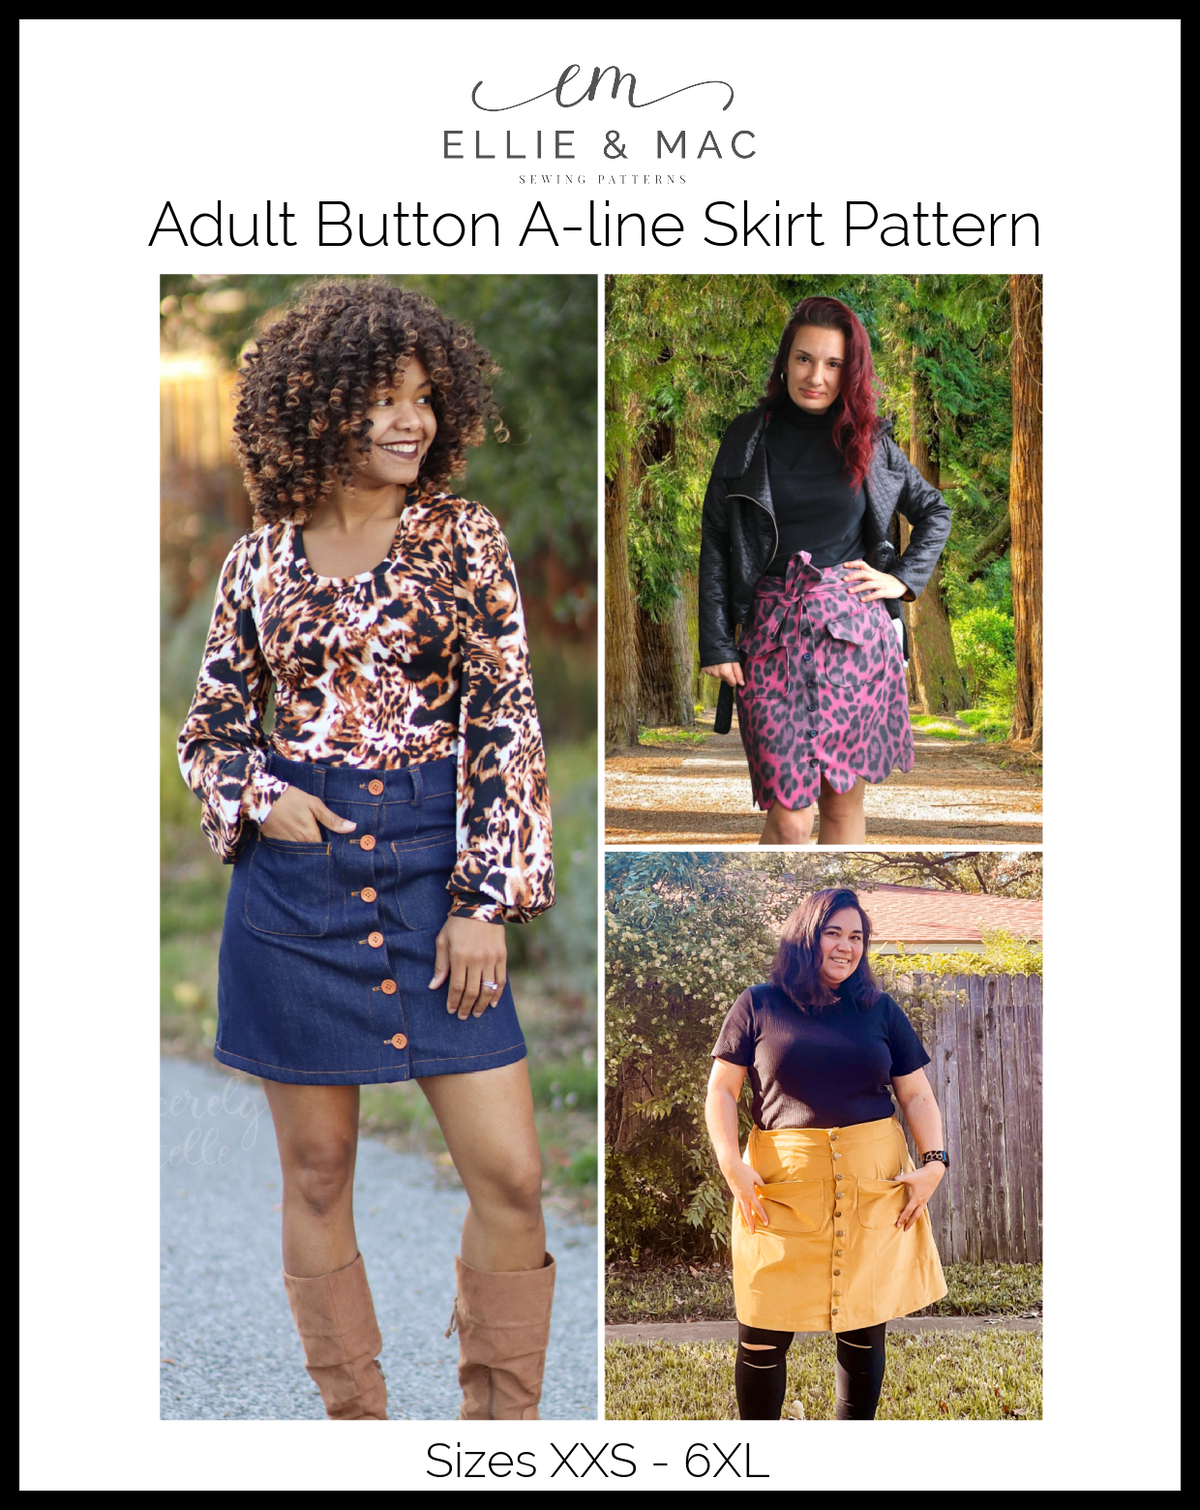 Adult Button A-line Skirt Pattern